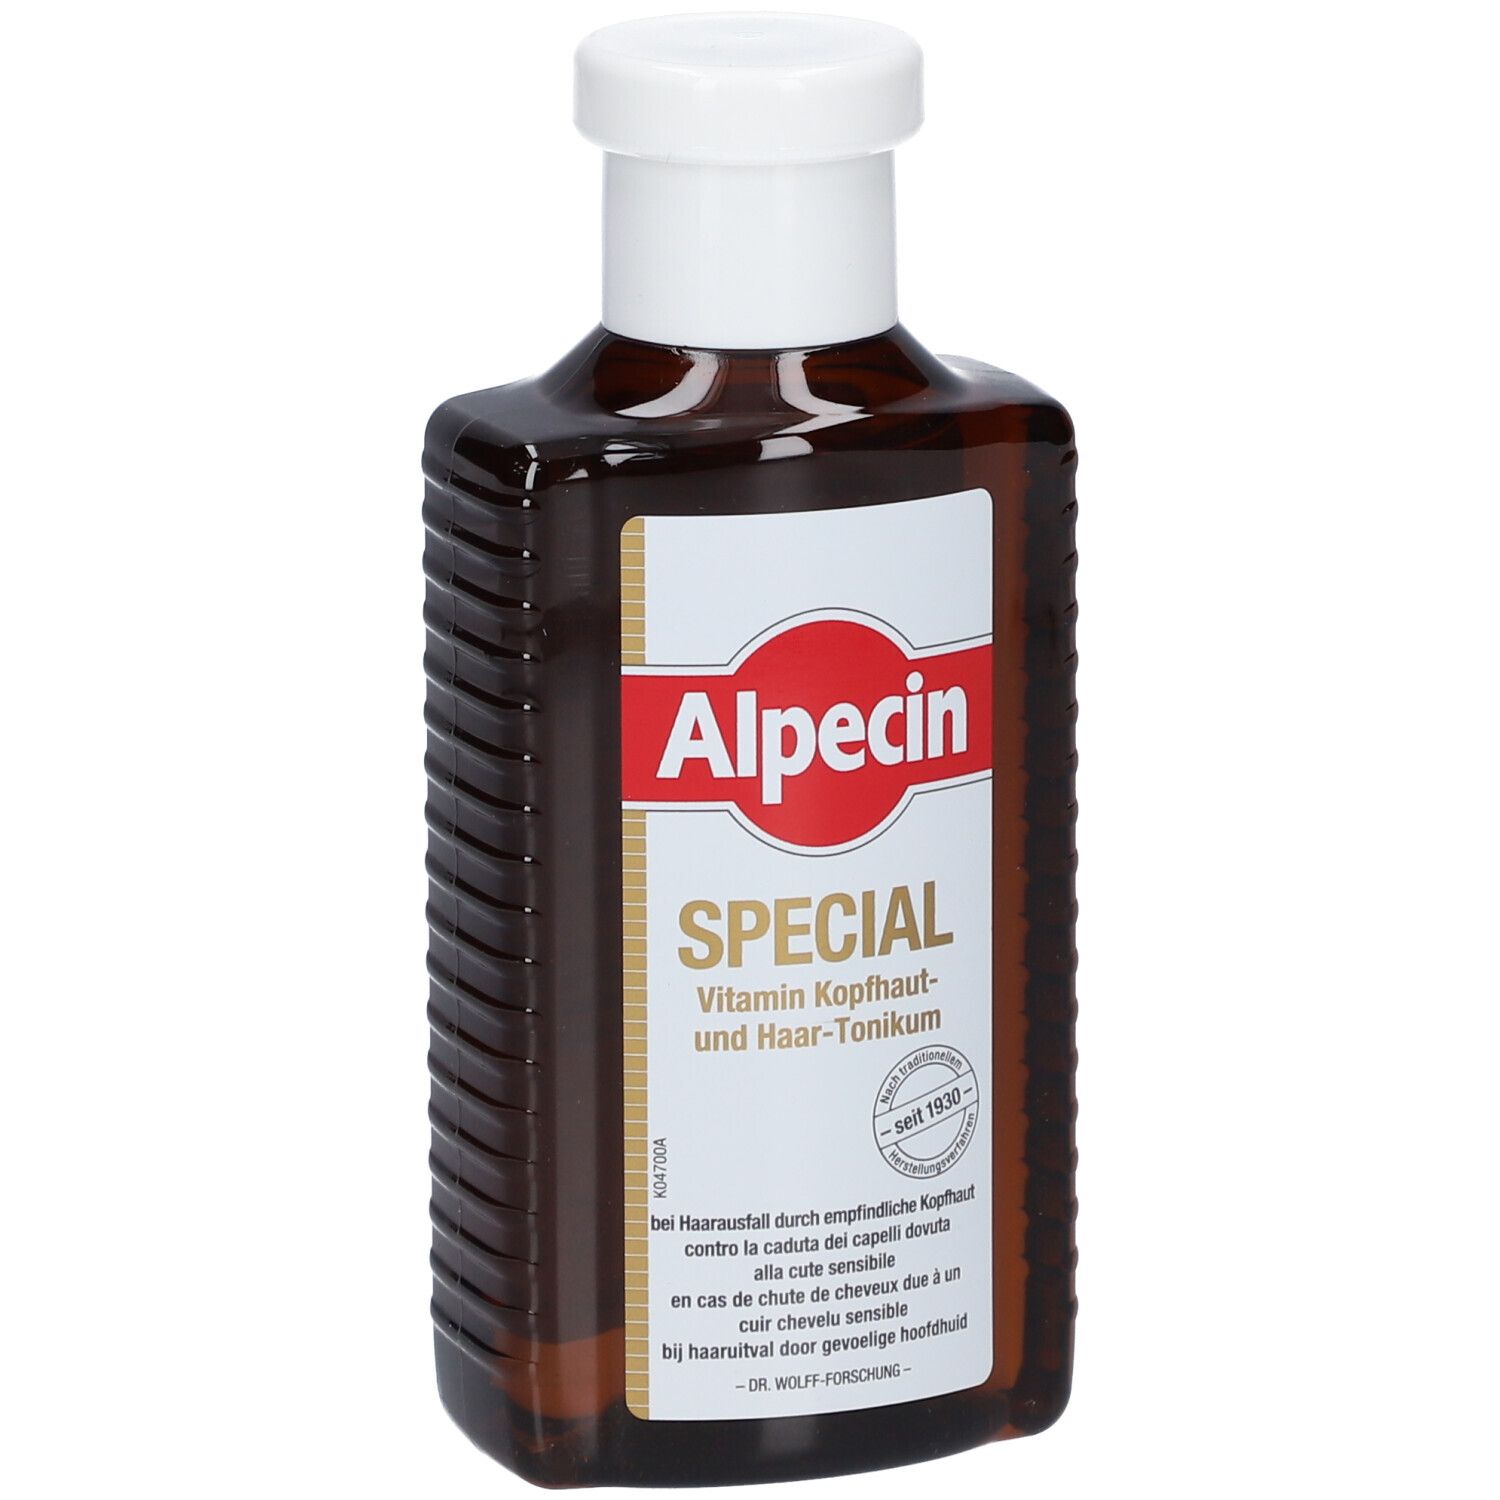 Alpecin Special Tonico Intensivo